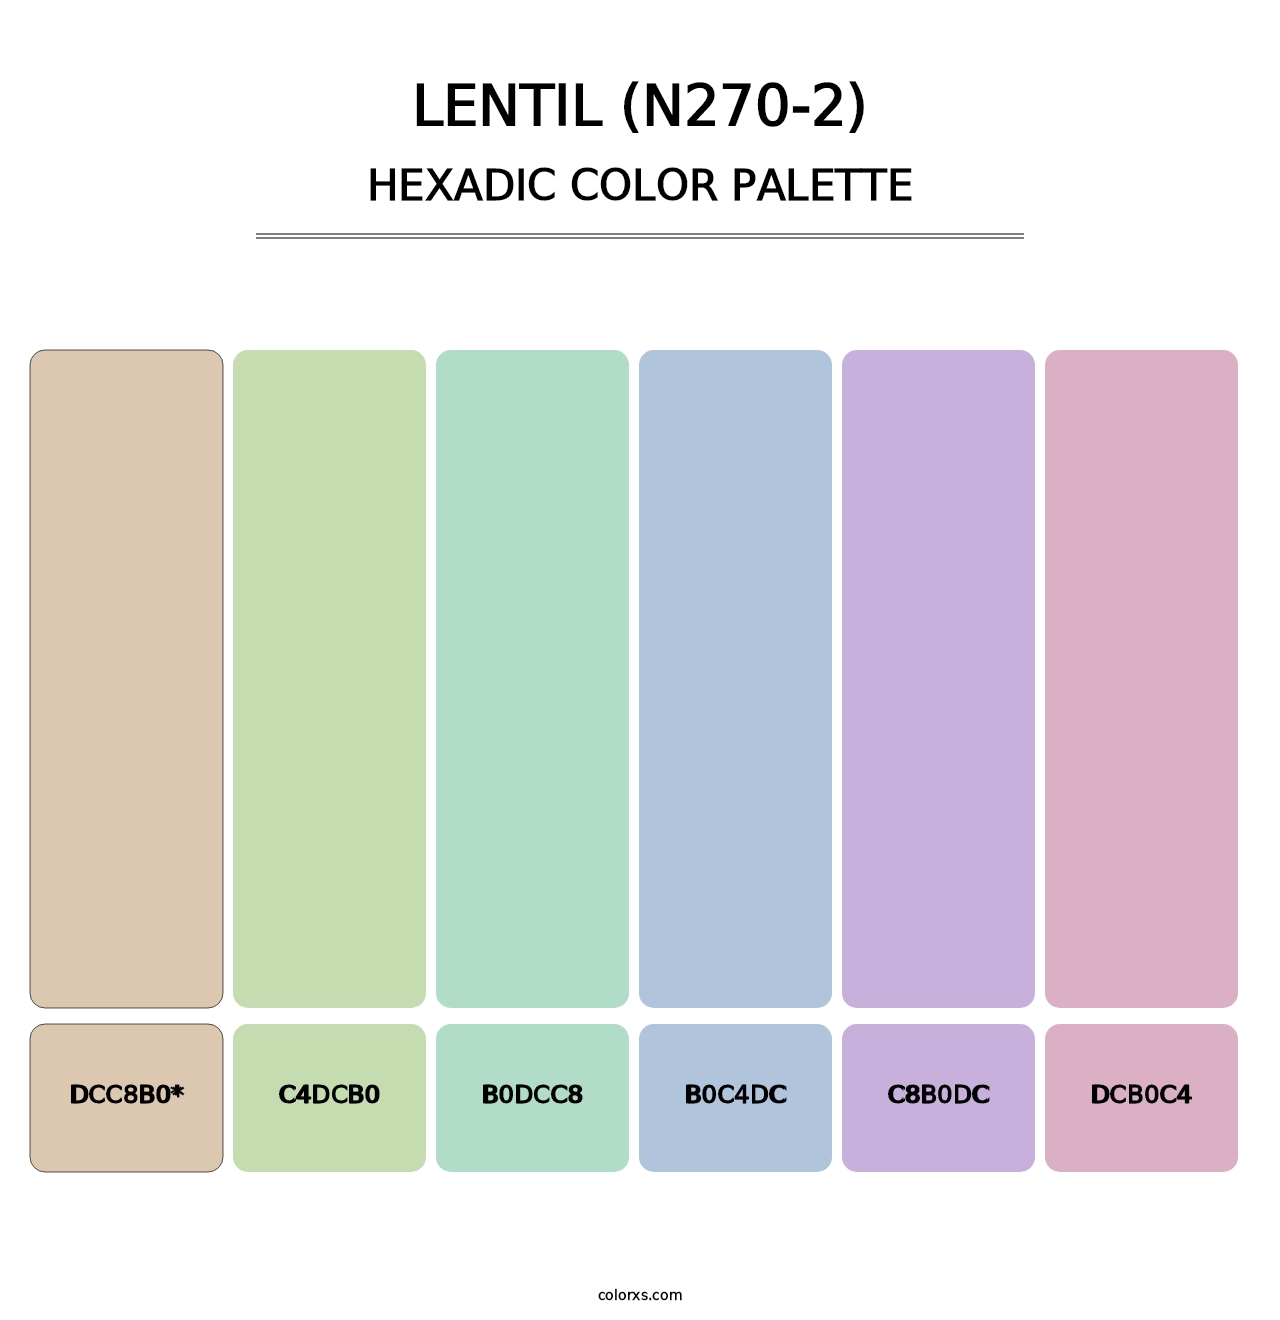 Lentil (N270-2) - Hexadic Color Palette